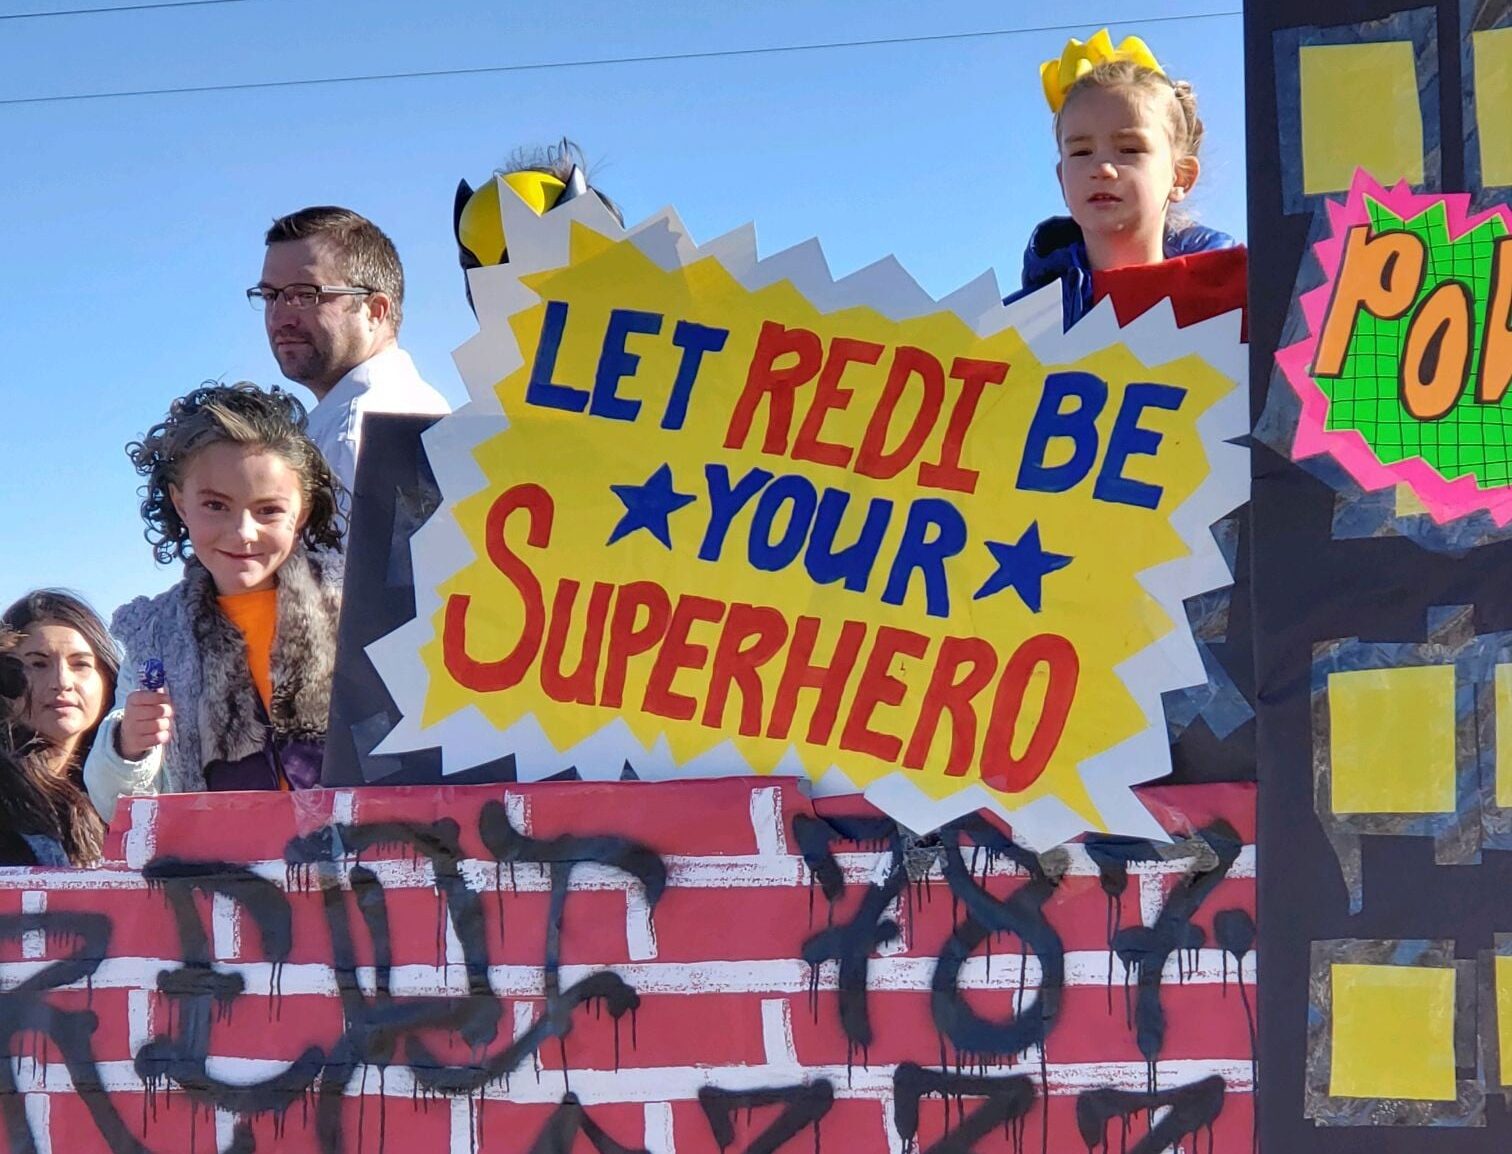 Halloween Parade - Let Redi be your Superhero